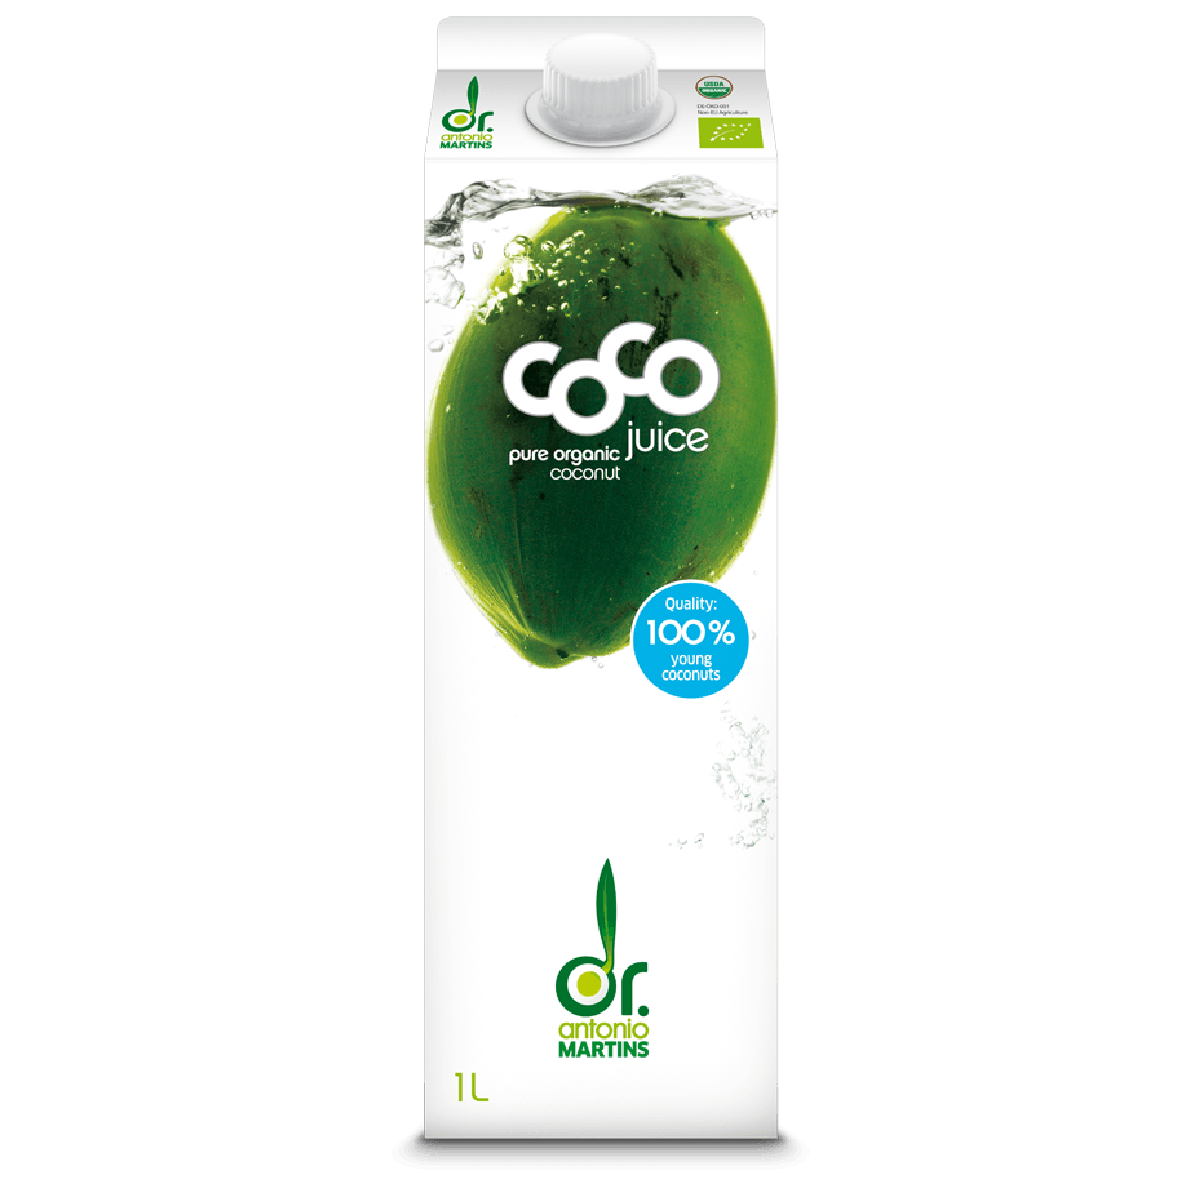 Coco Juice 1 liter